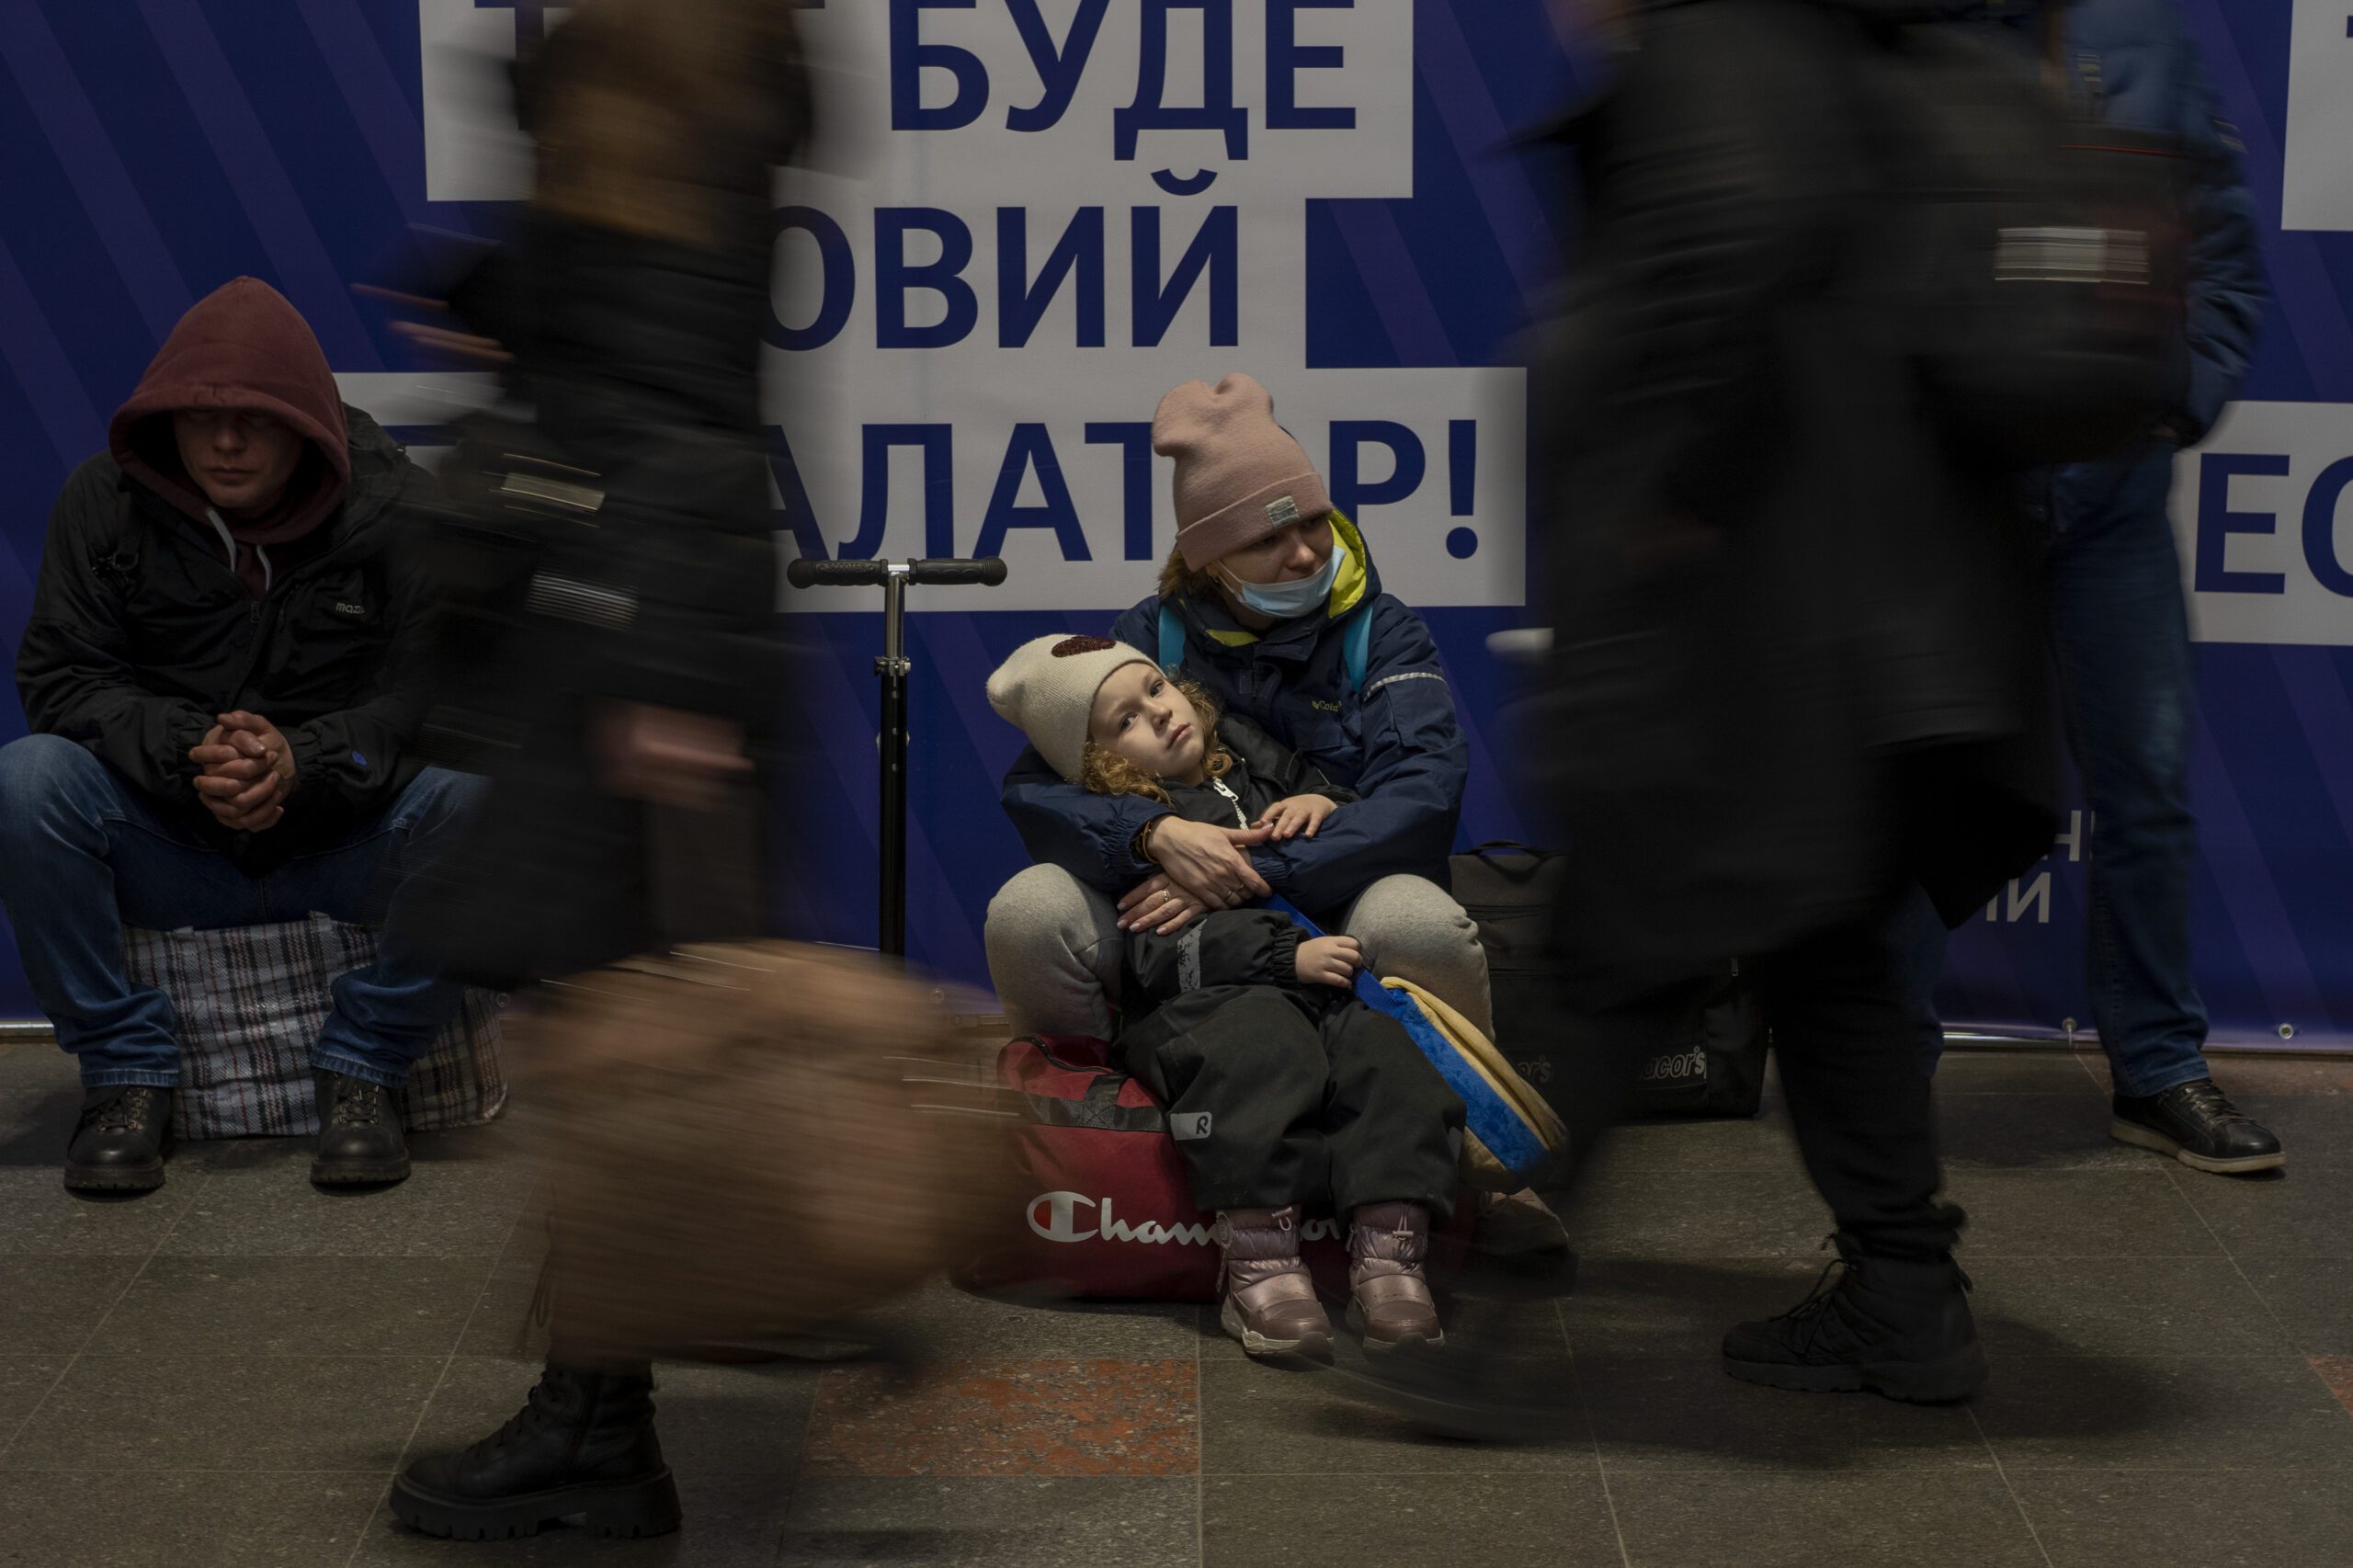 Ukraine Tensions Photo Gallery